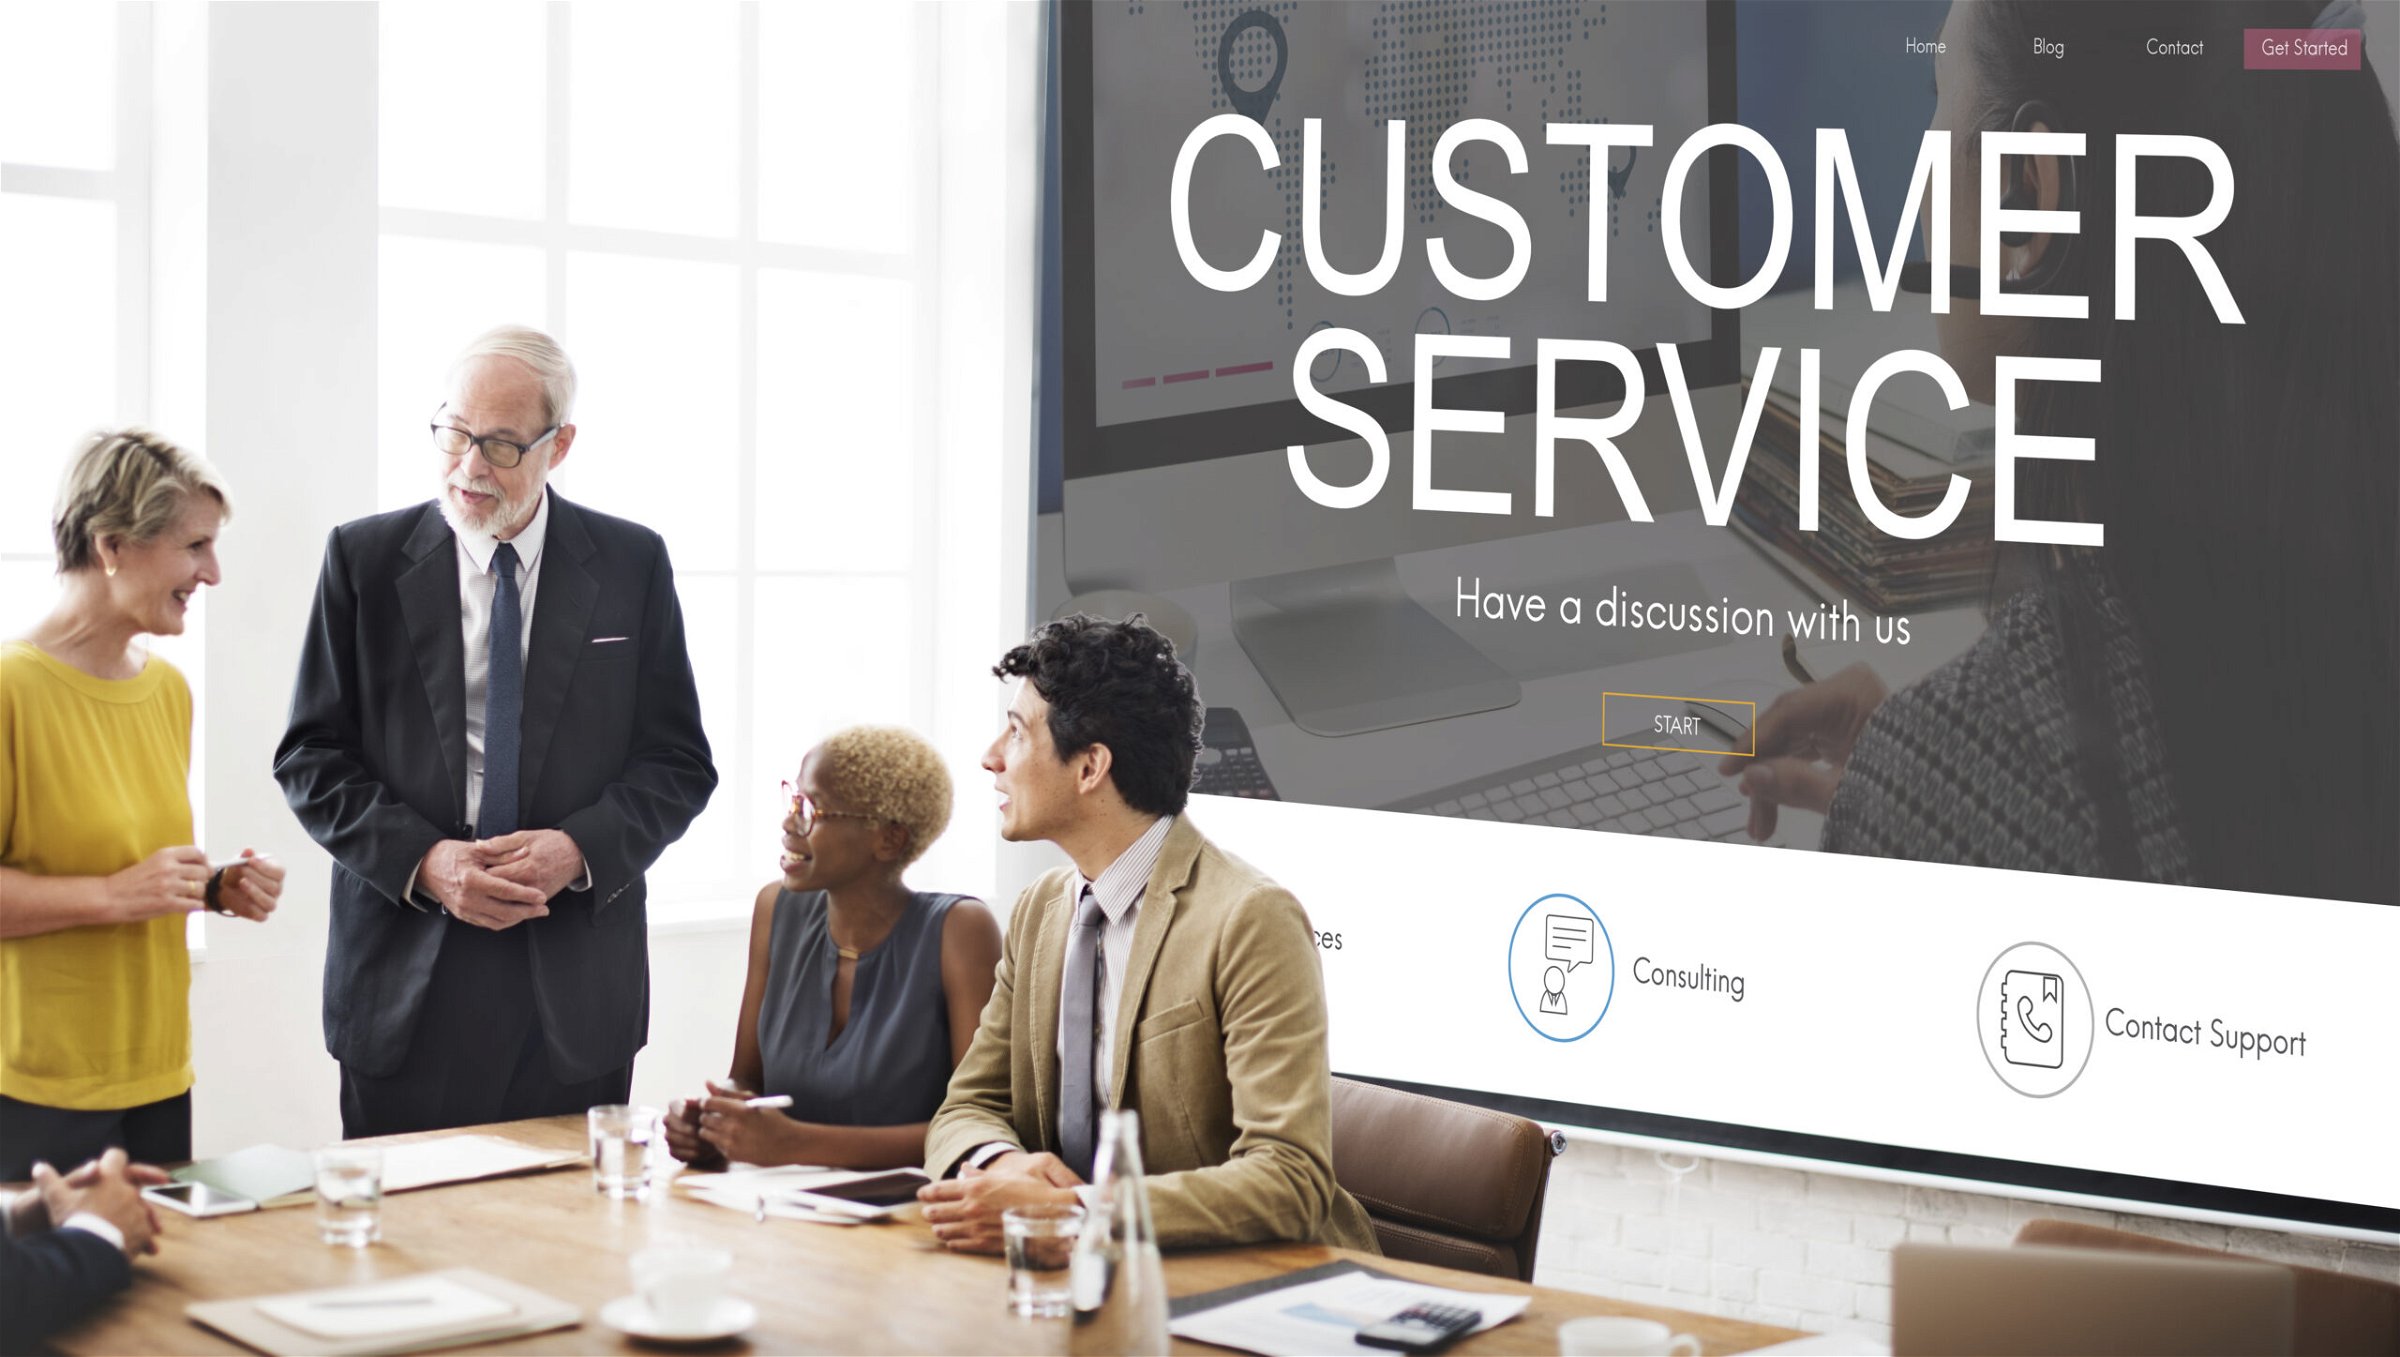 ewarding excellence in customer service